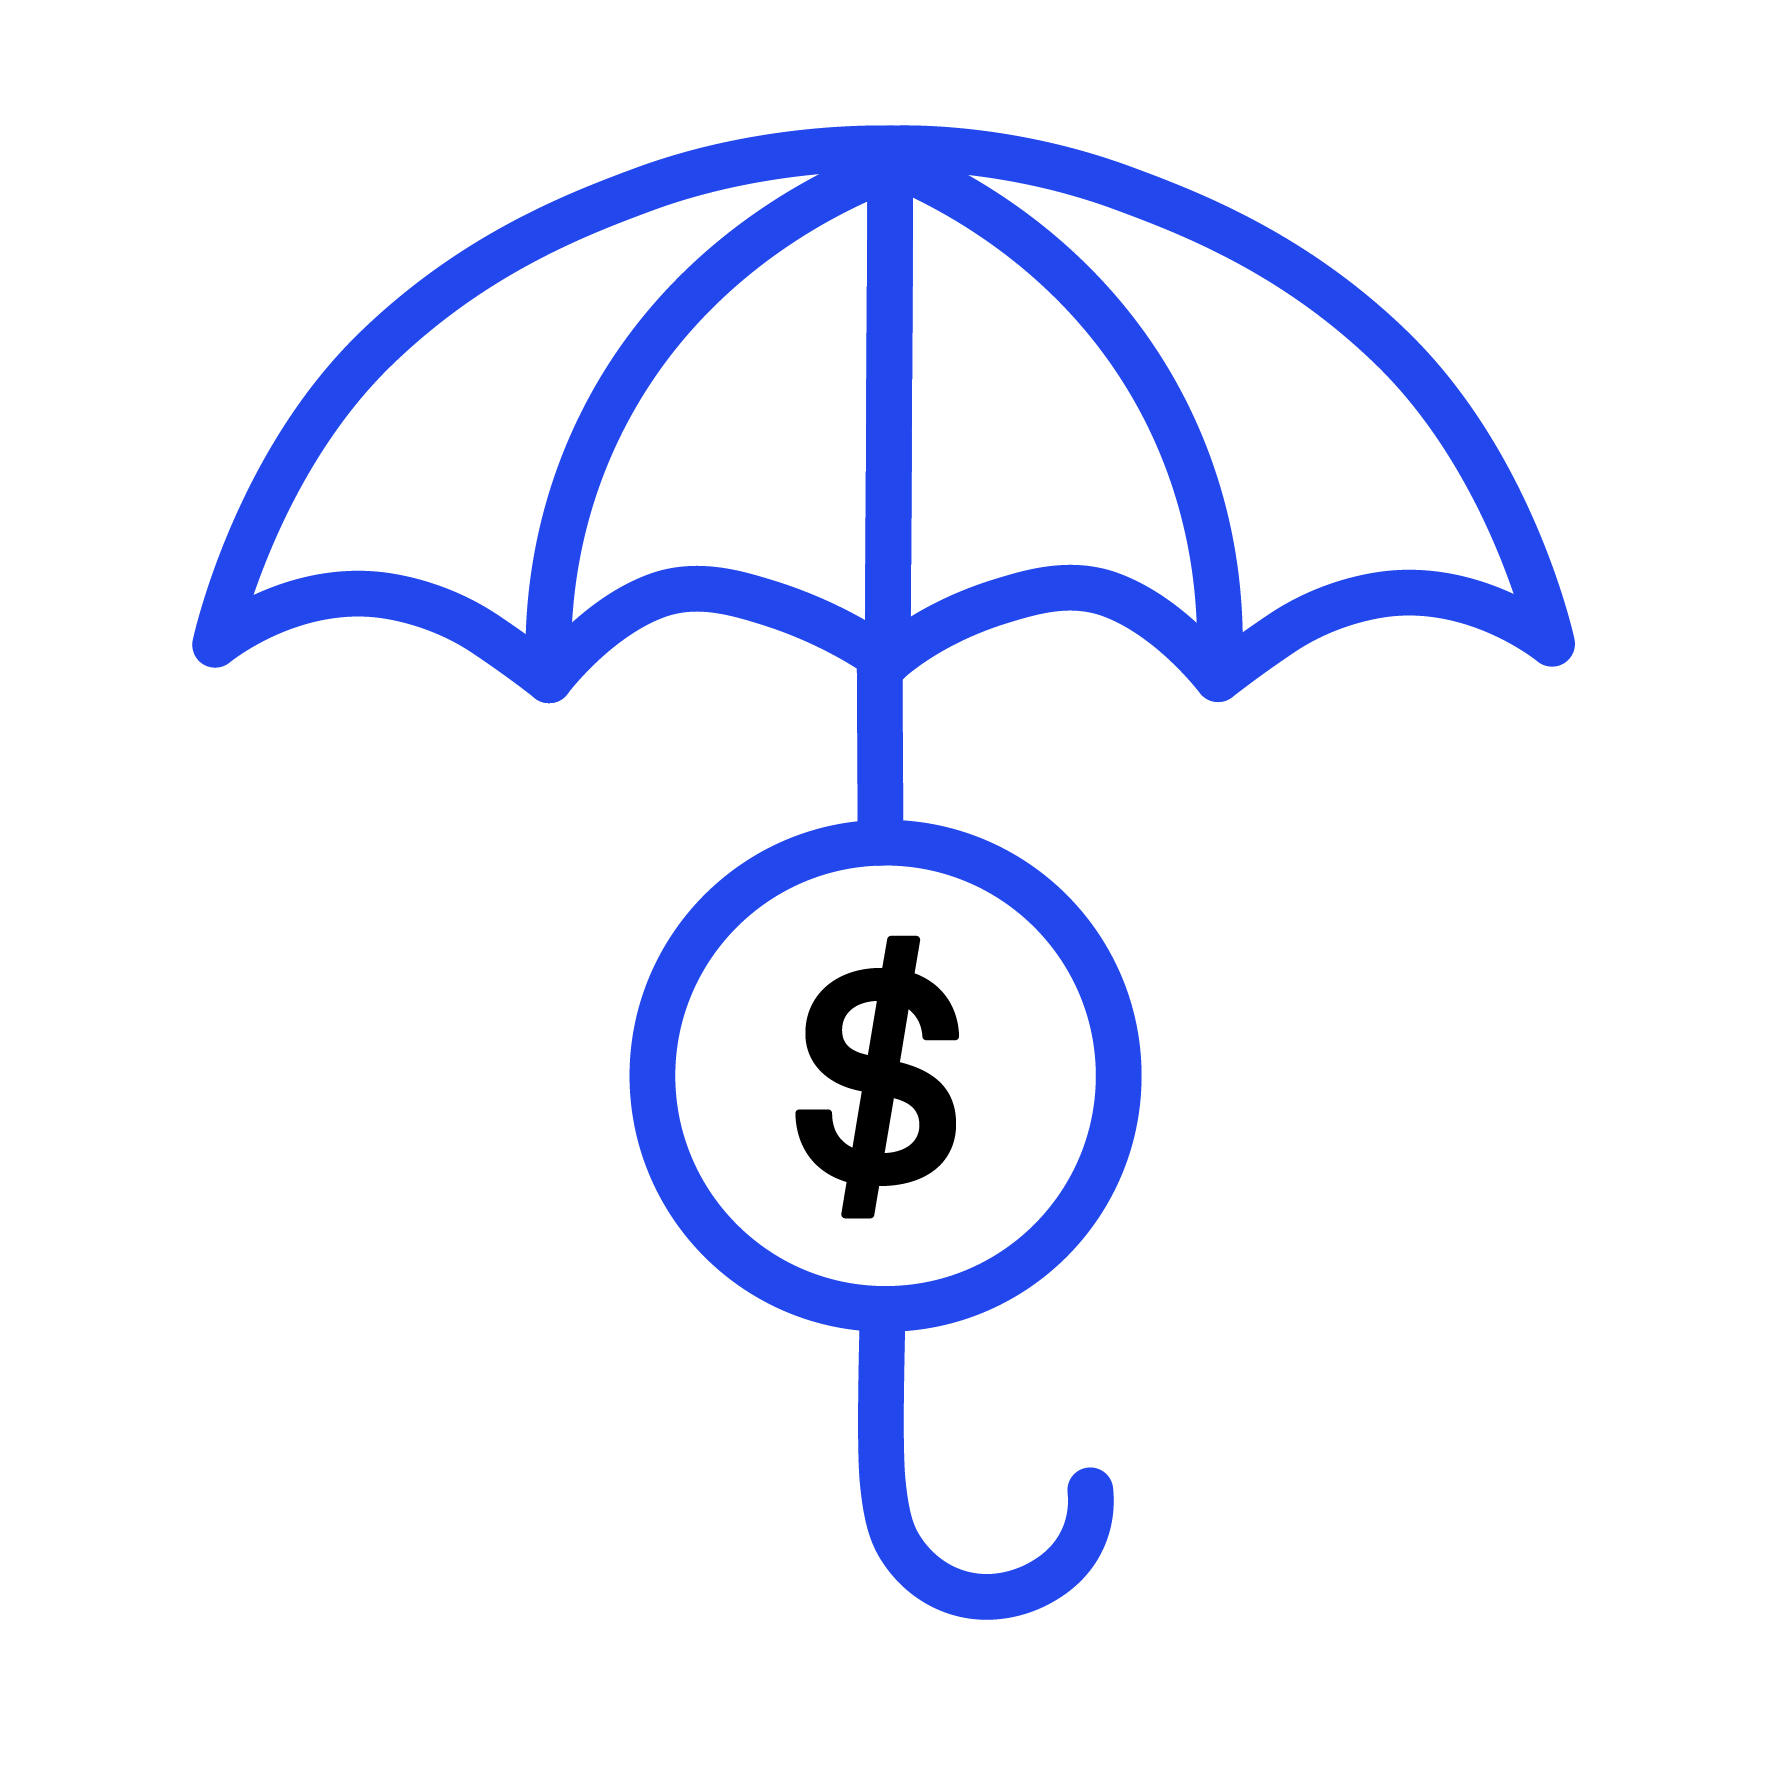 Umbrella with a dollar sign underneath